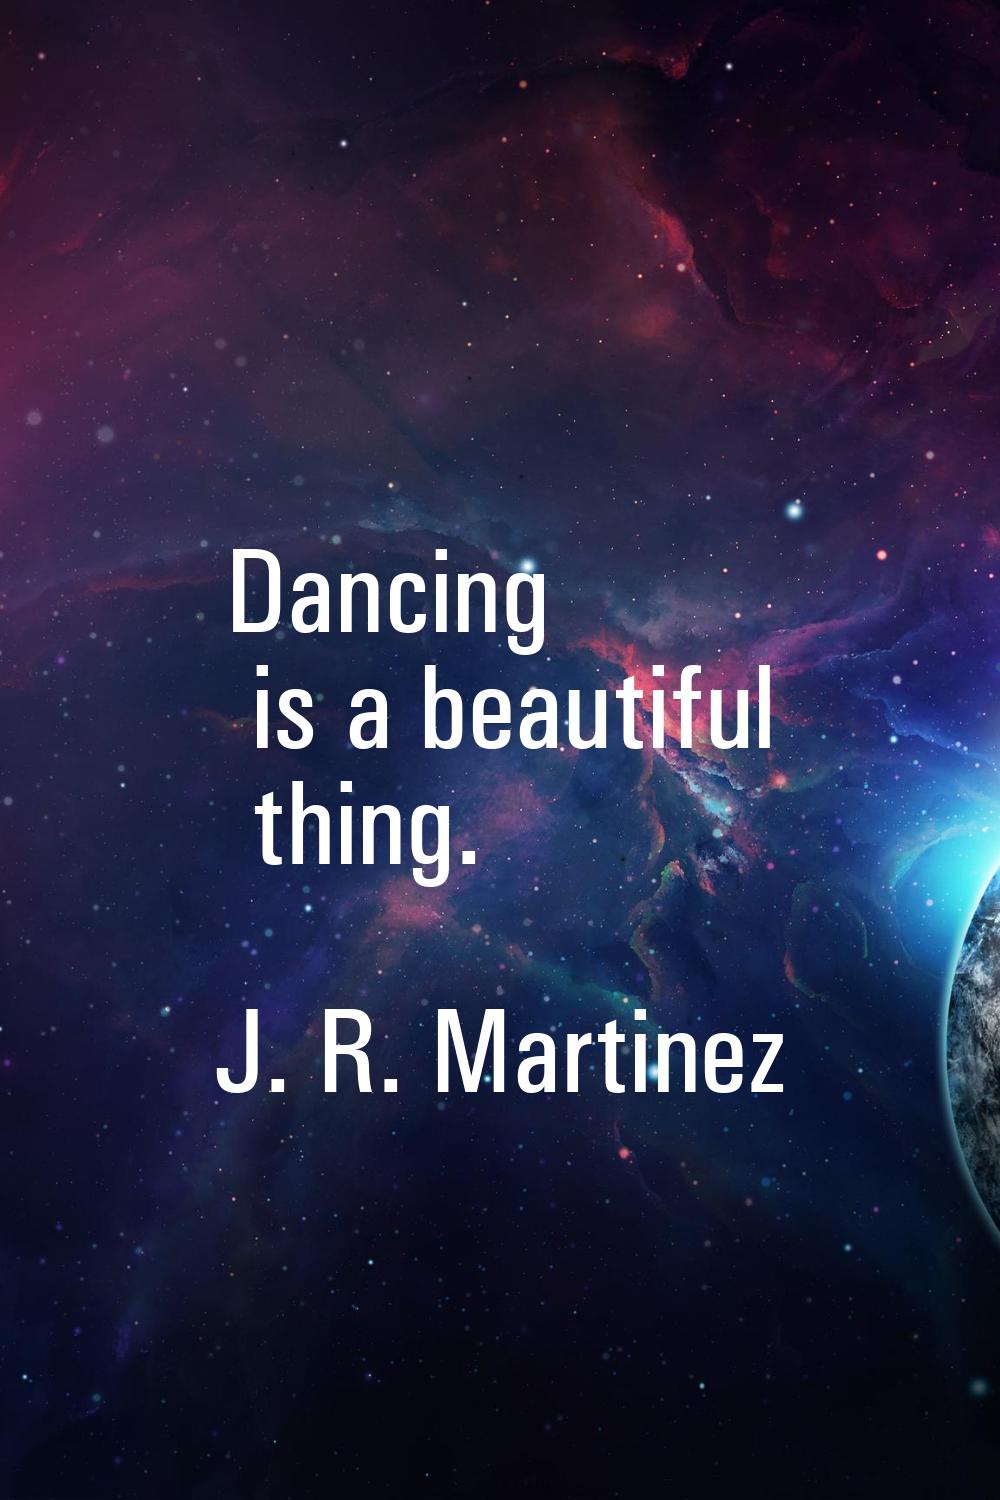 Dancing is a beautiful thing.